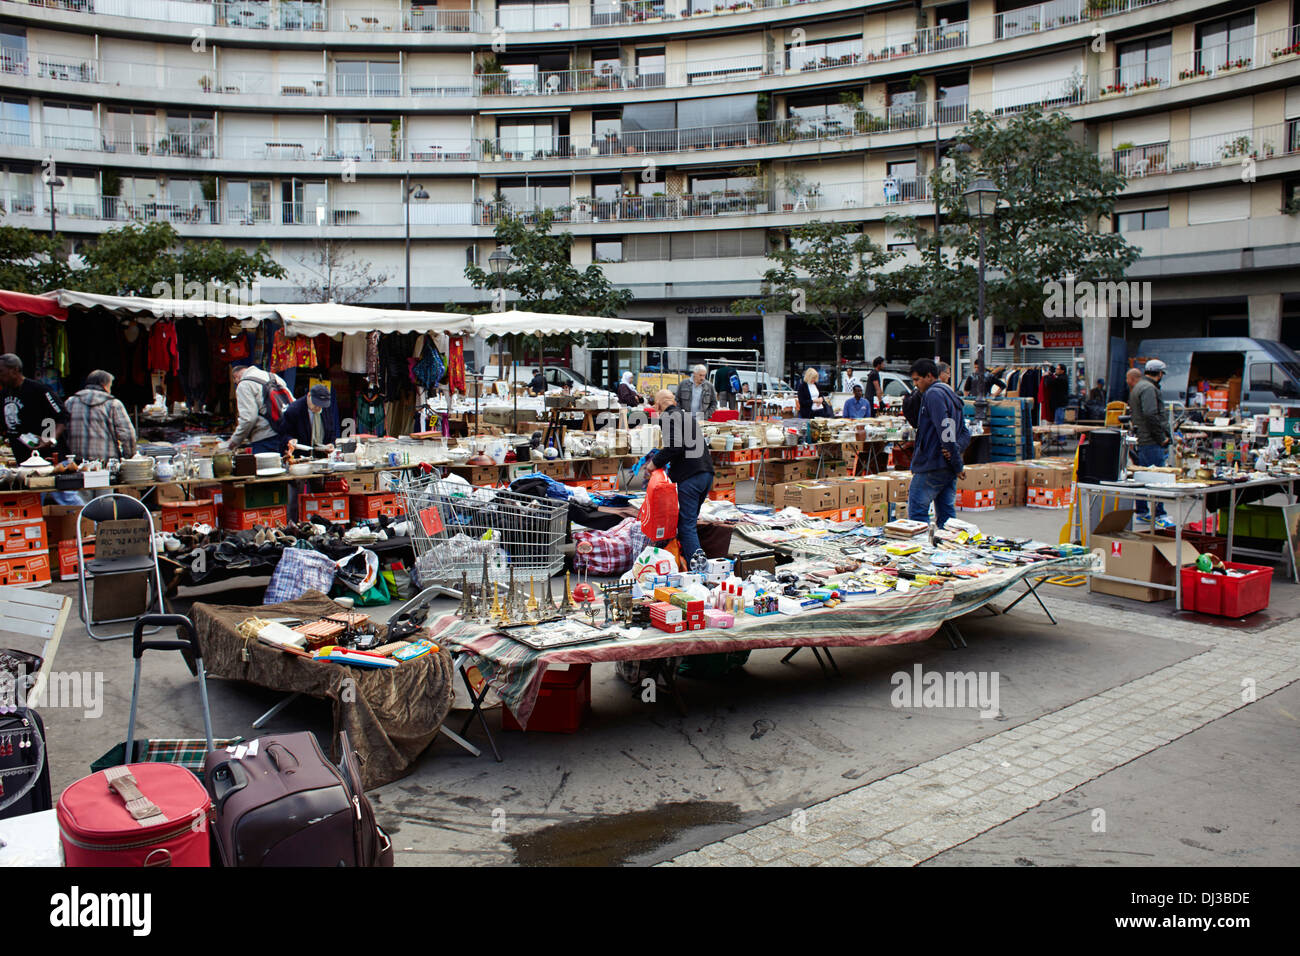 Flea market in Paris, France Stock Photo - Alamy